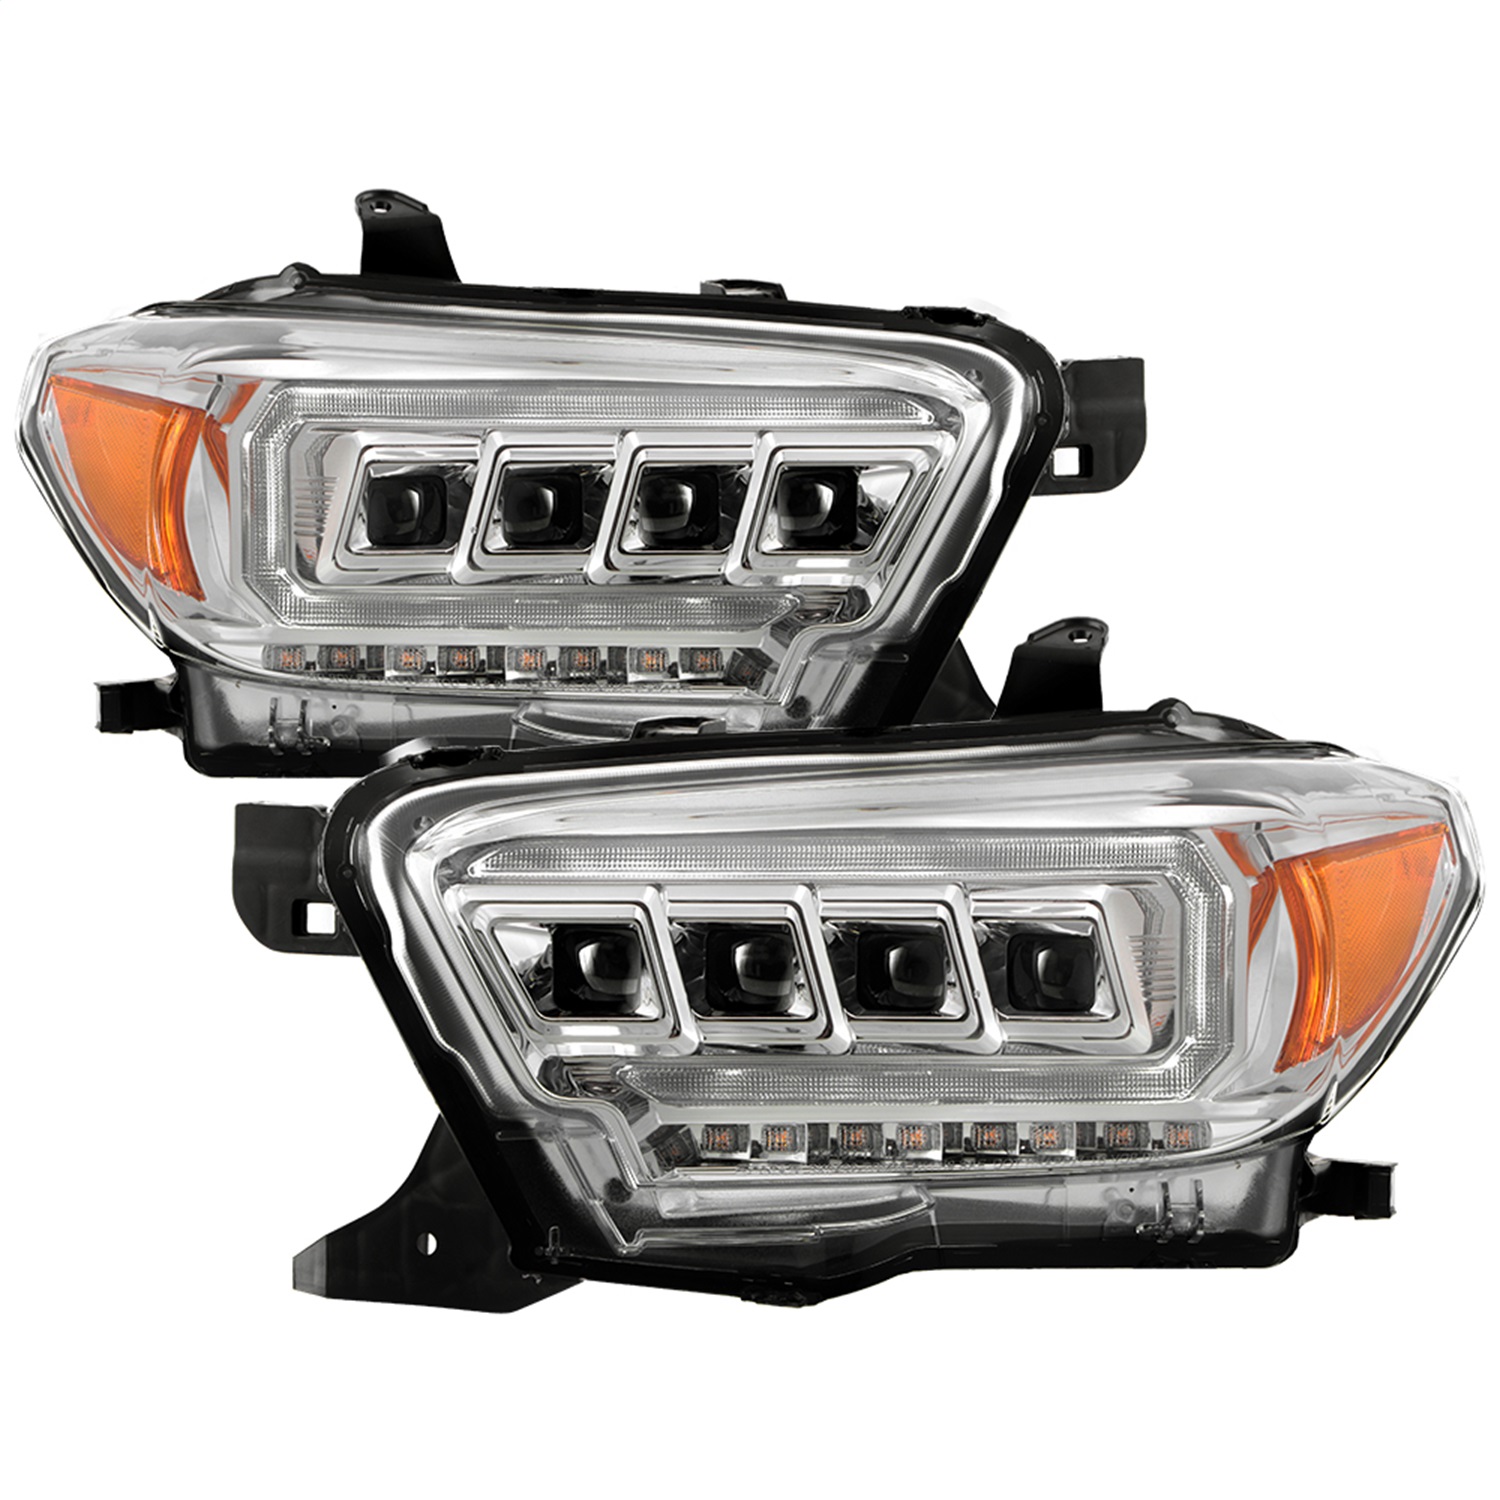 Spyder Auto 5088383 Projector Headlights Fits 16-20 Tacoma